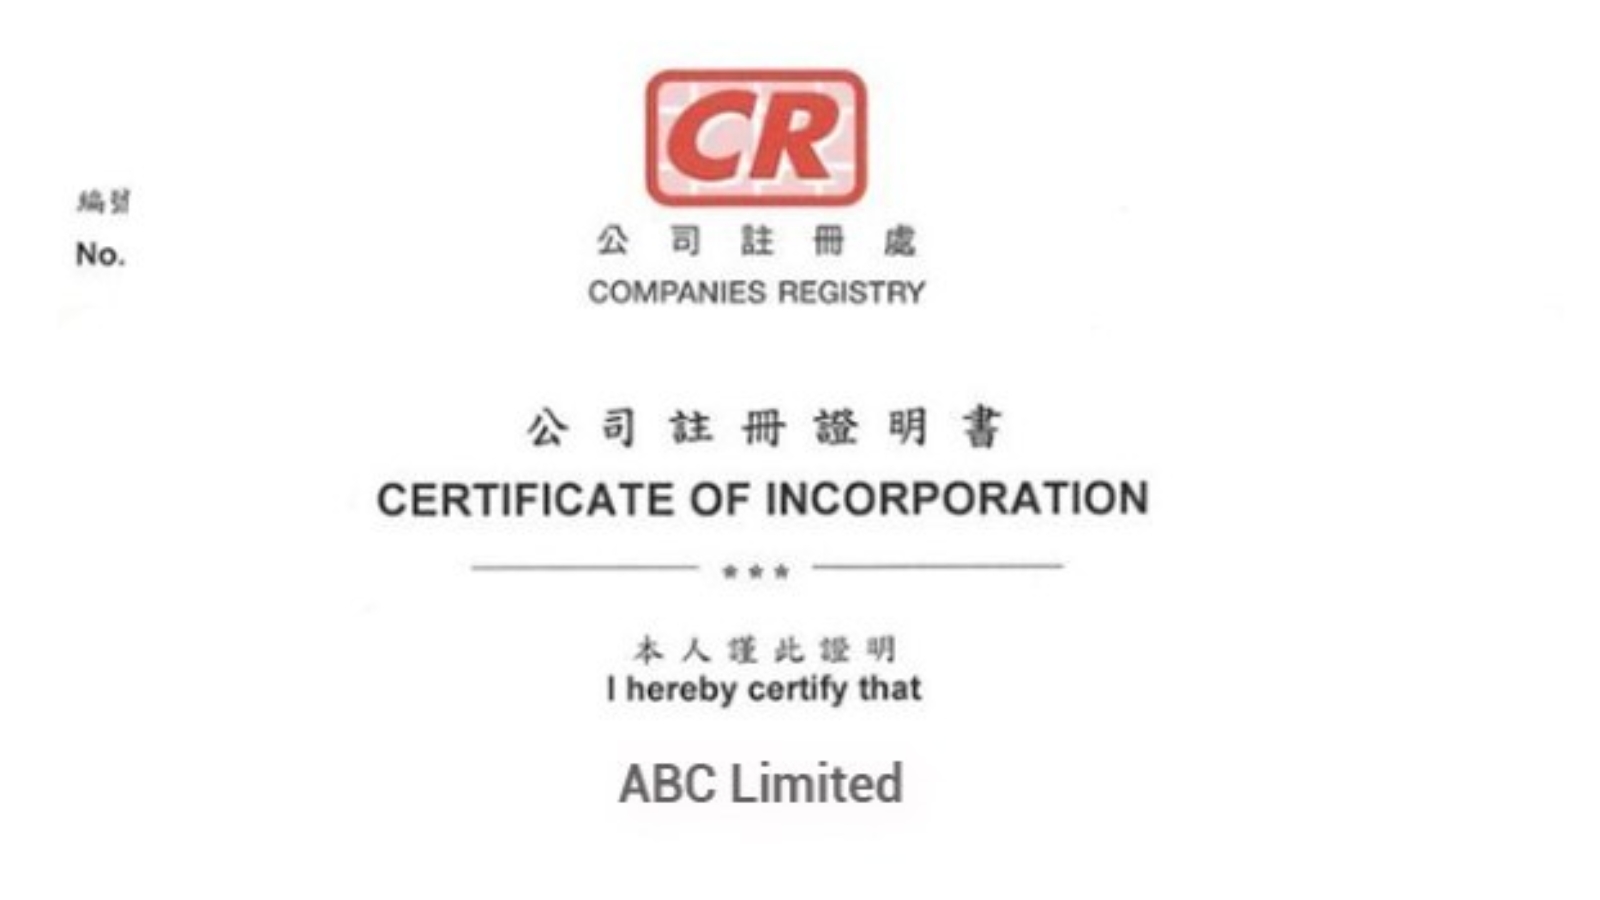 HK company incorporation